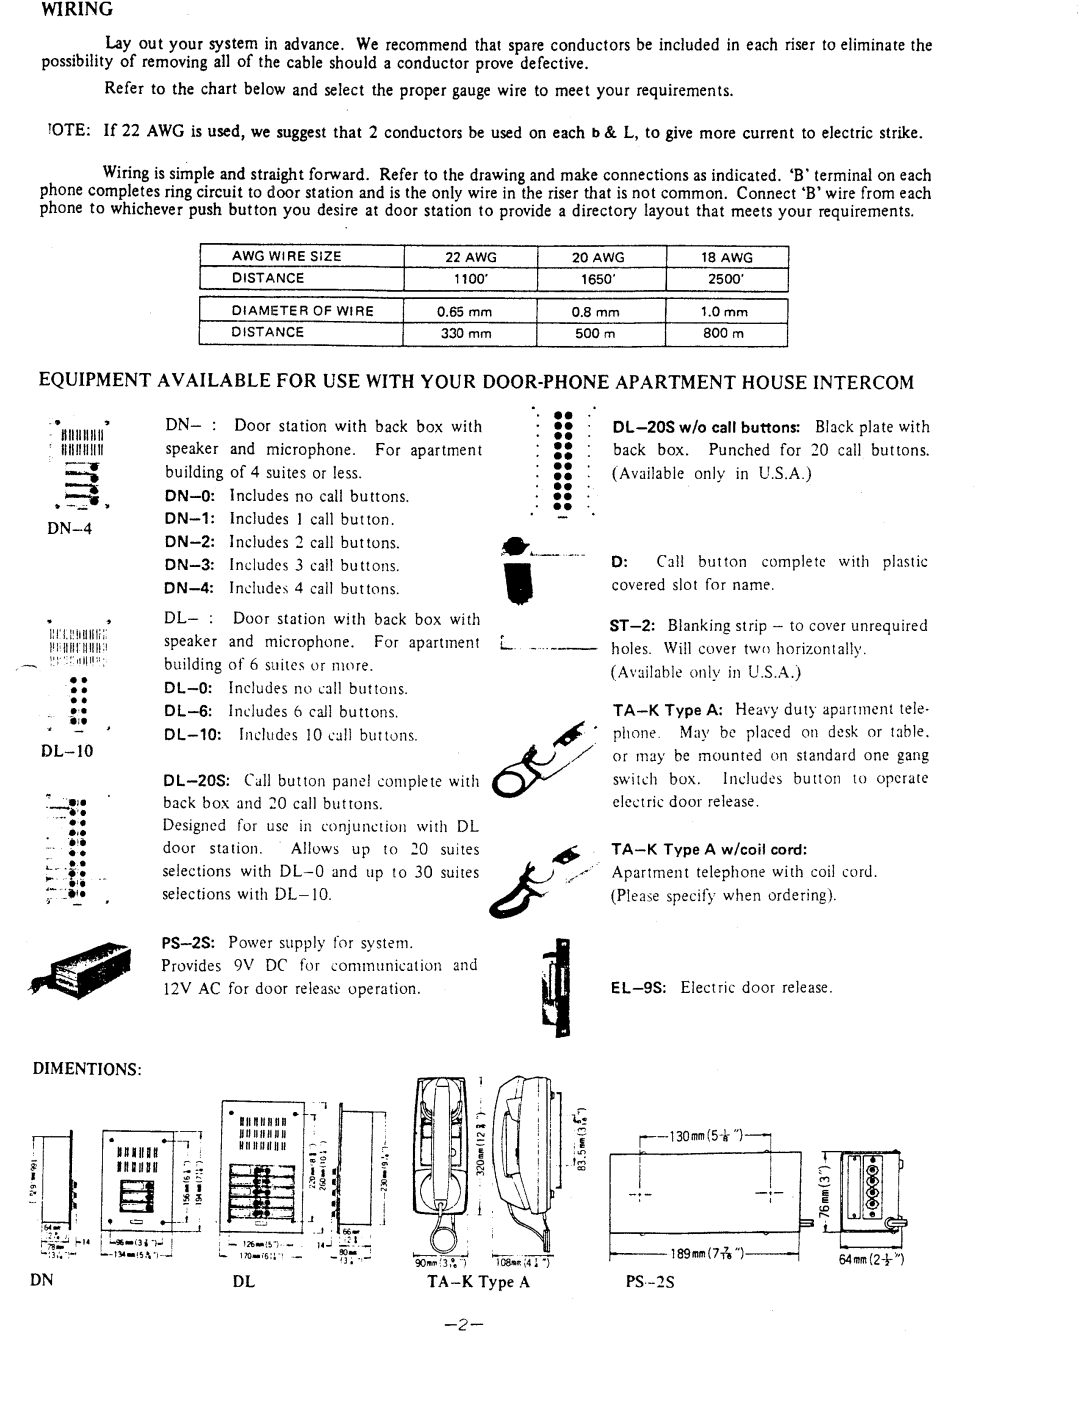 Aiphone DL-10, TA-K TYPE A manual 